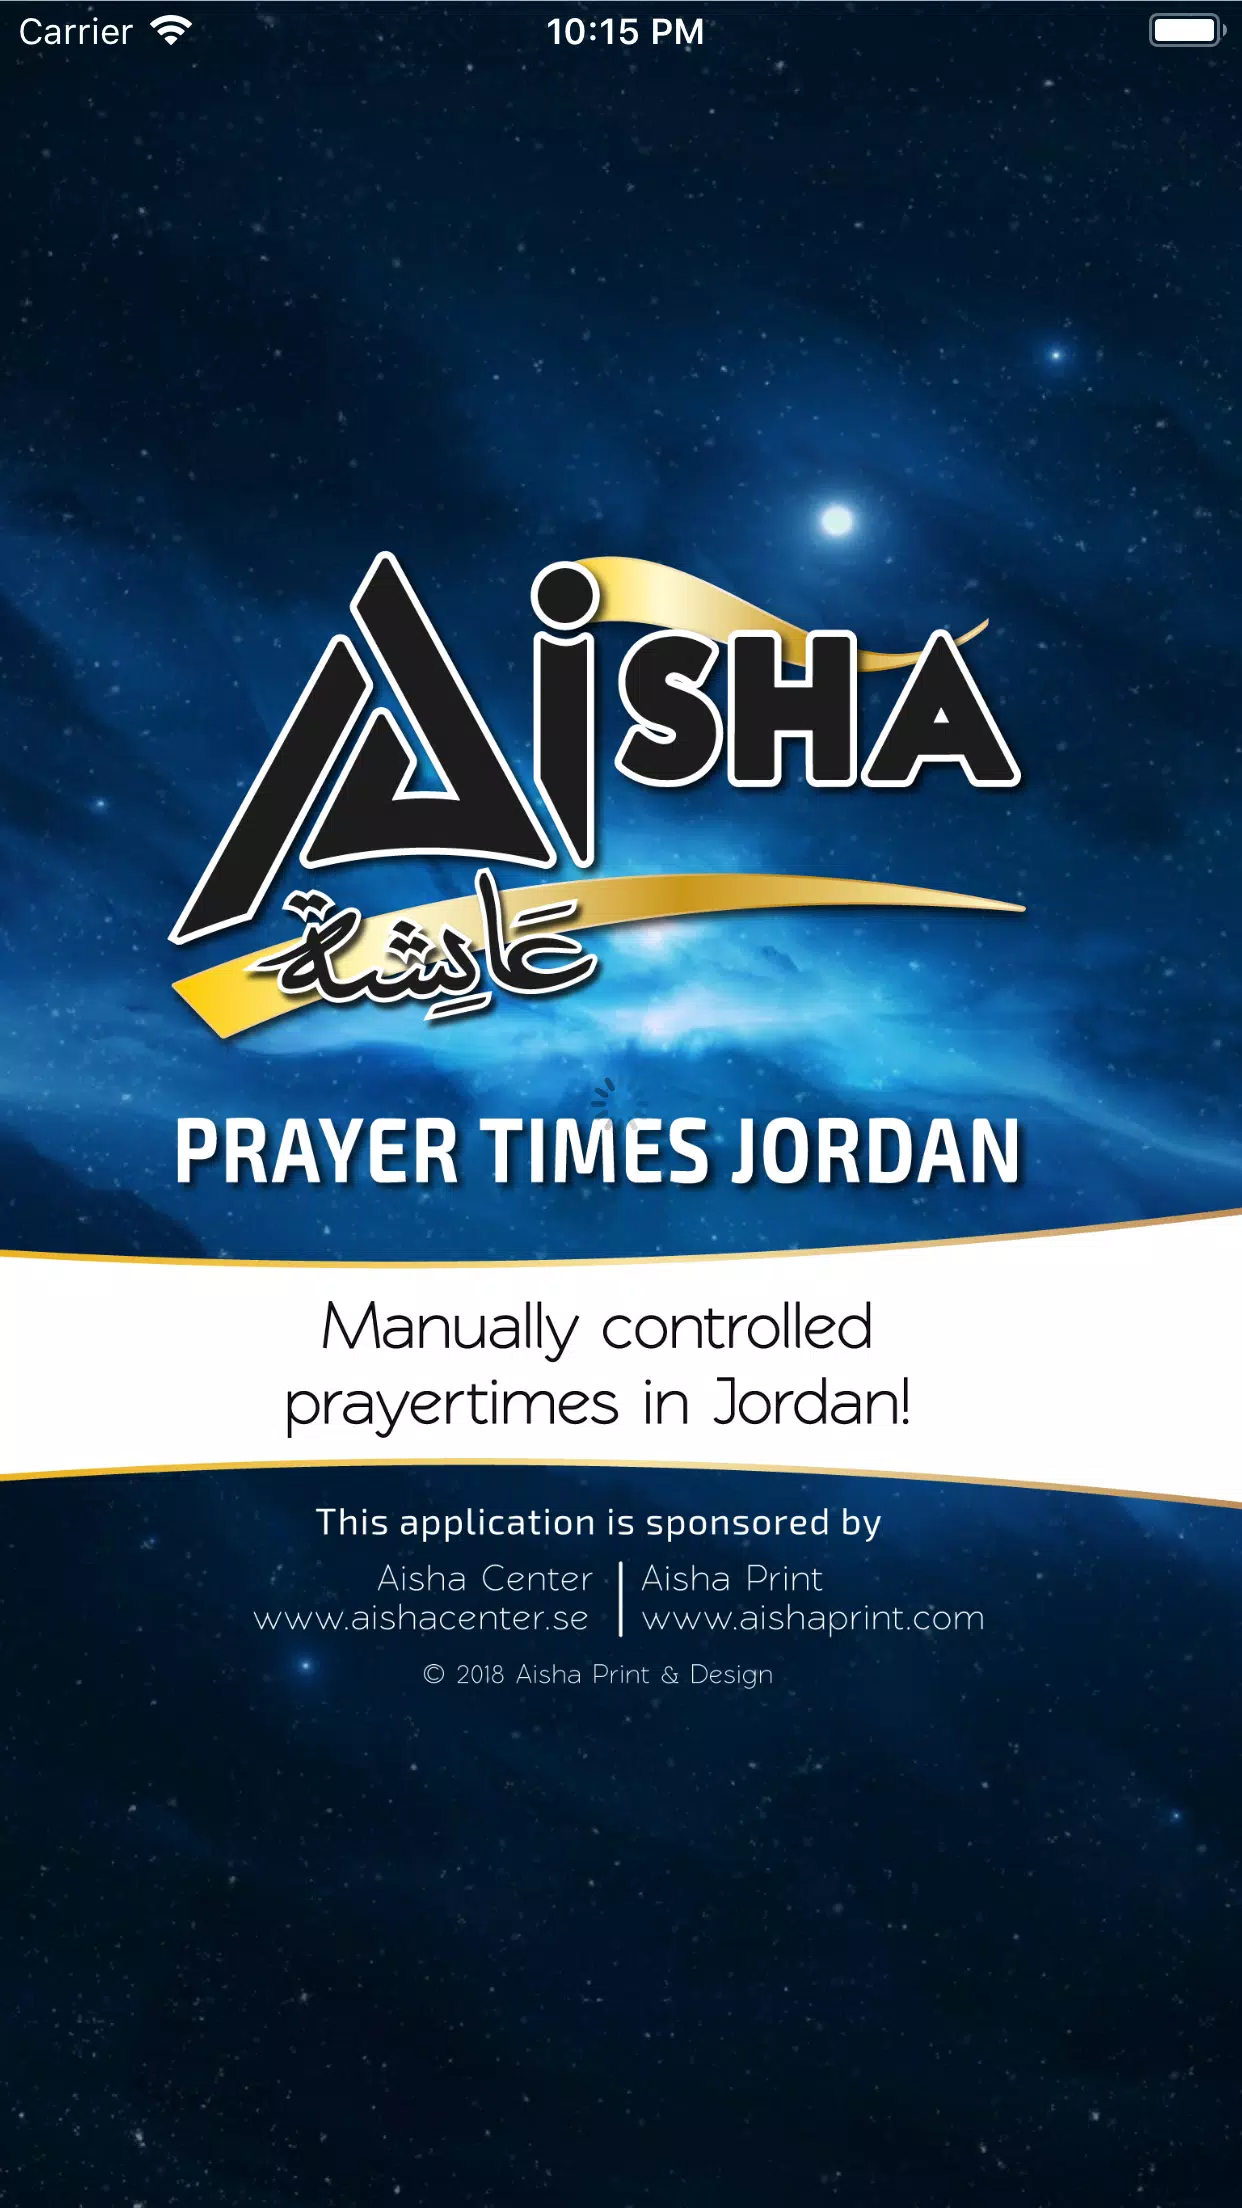 Prayer times Jordan for Android - APK Download